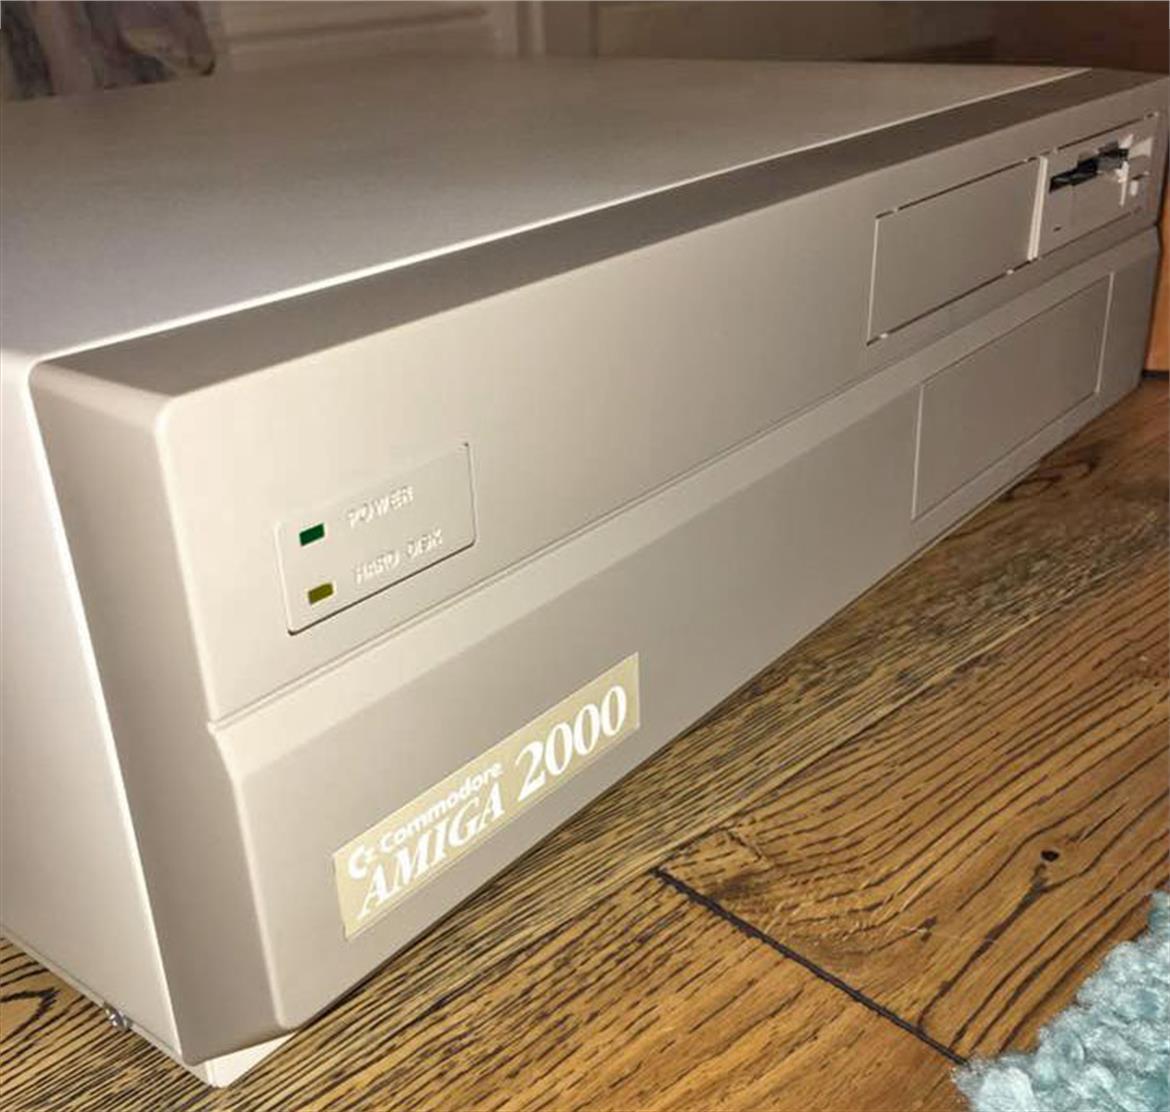 Dude Scores 30 Year Old Virgin Commodore Amiga 2000 New In Box